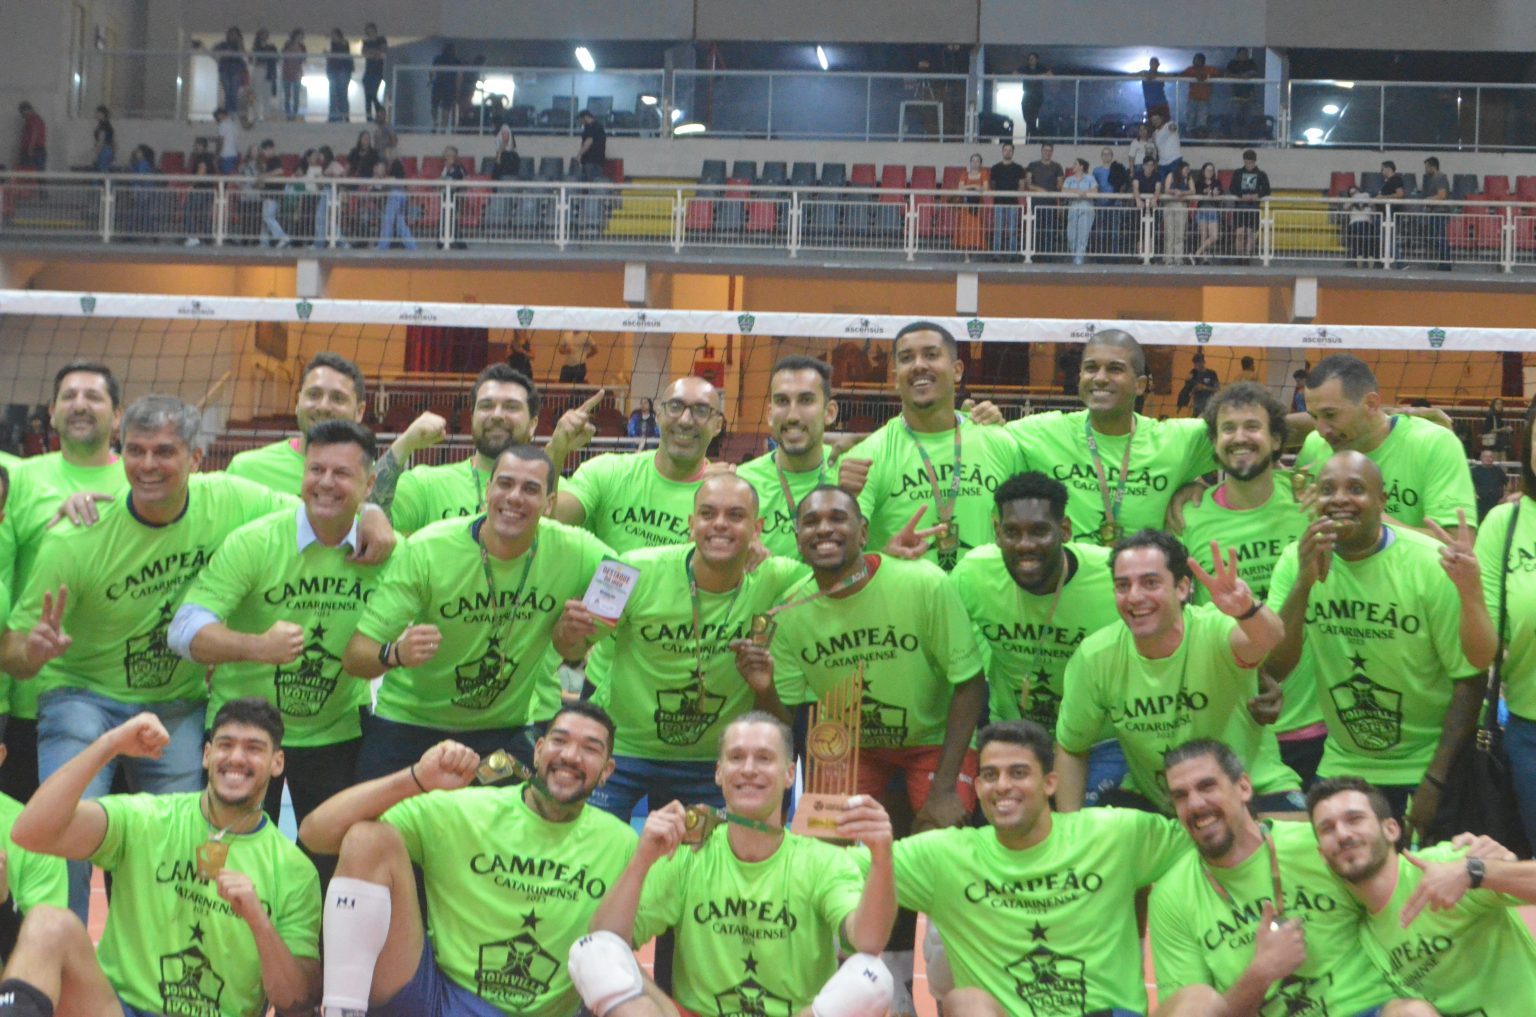 Jogadores do Joinville Vôlei comemorando título inédito, todos com camisas verdes.